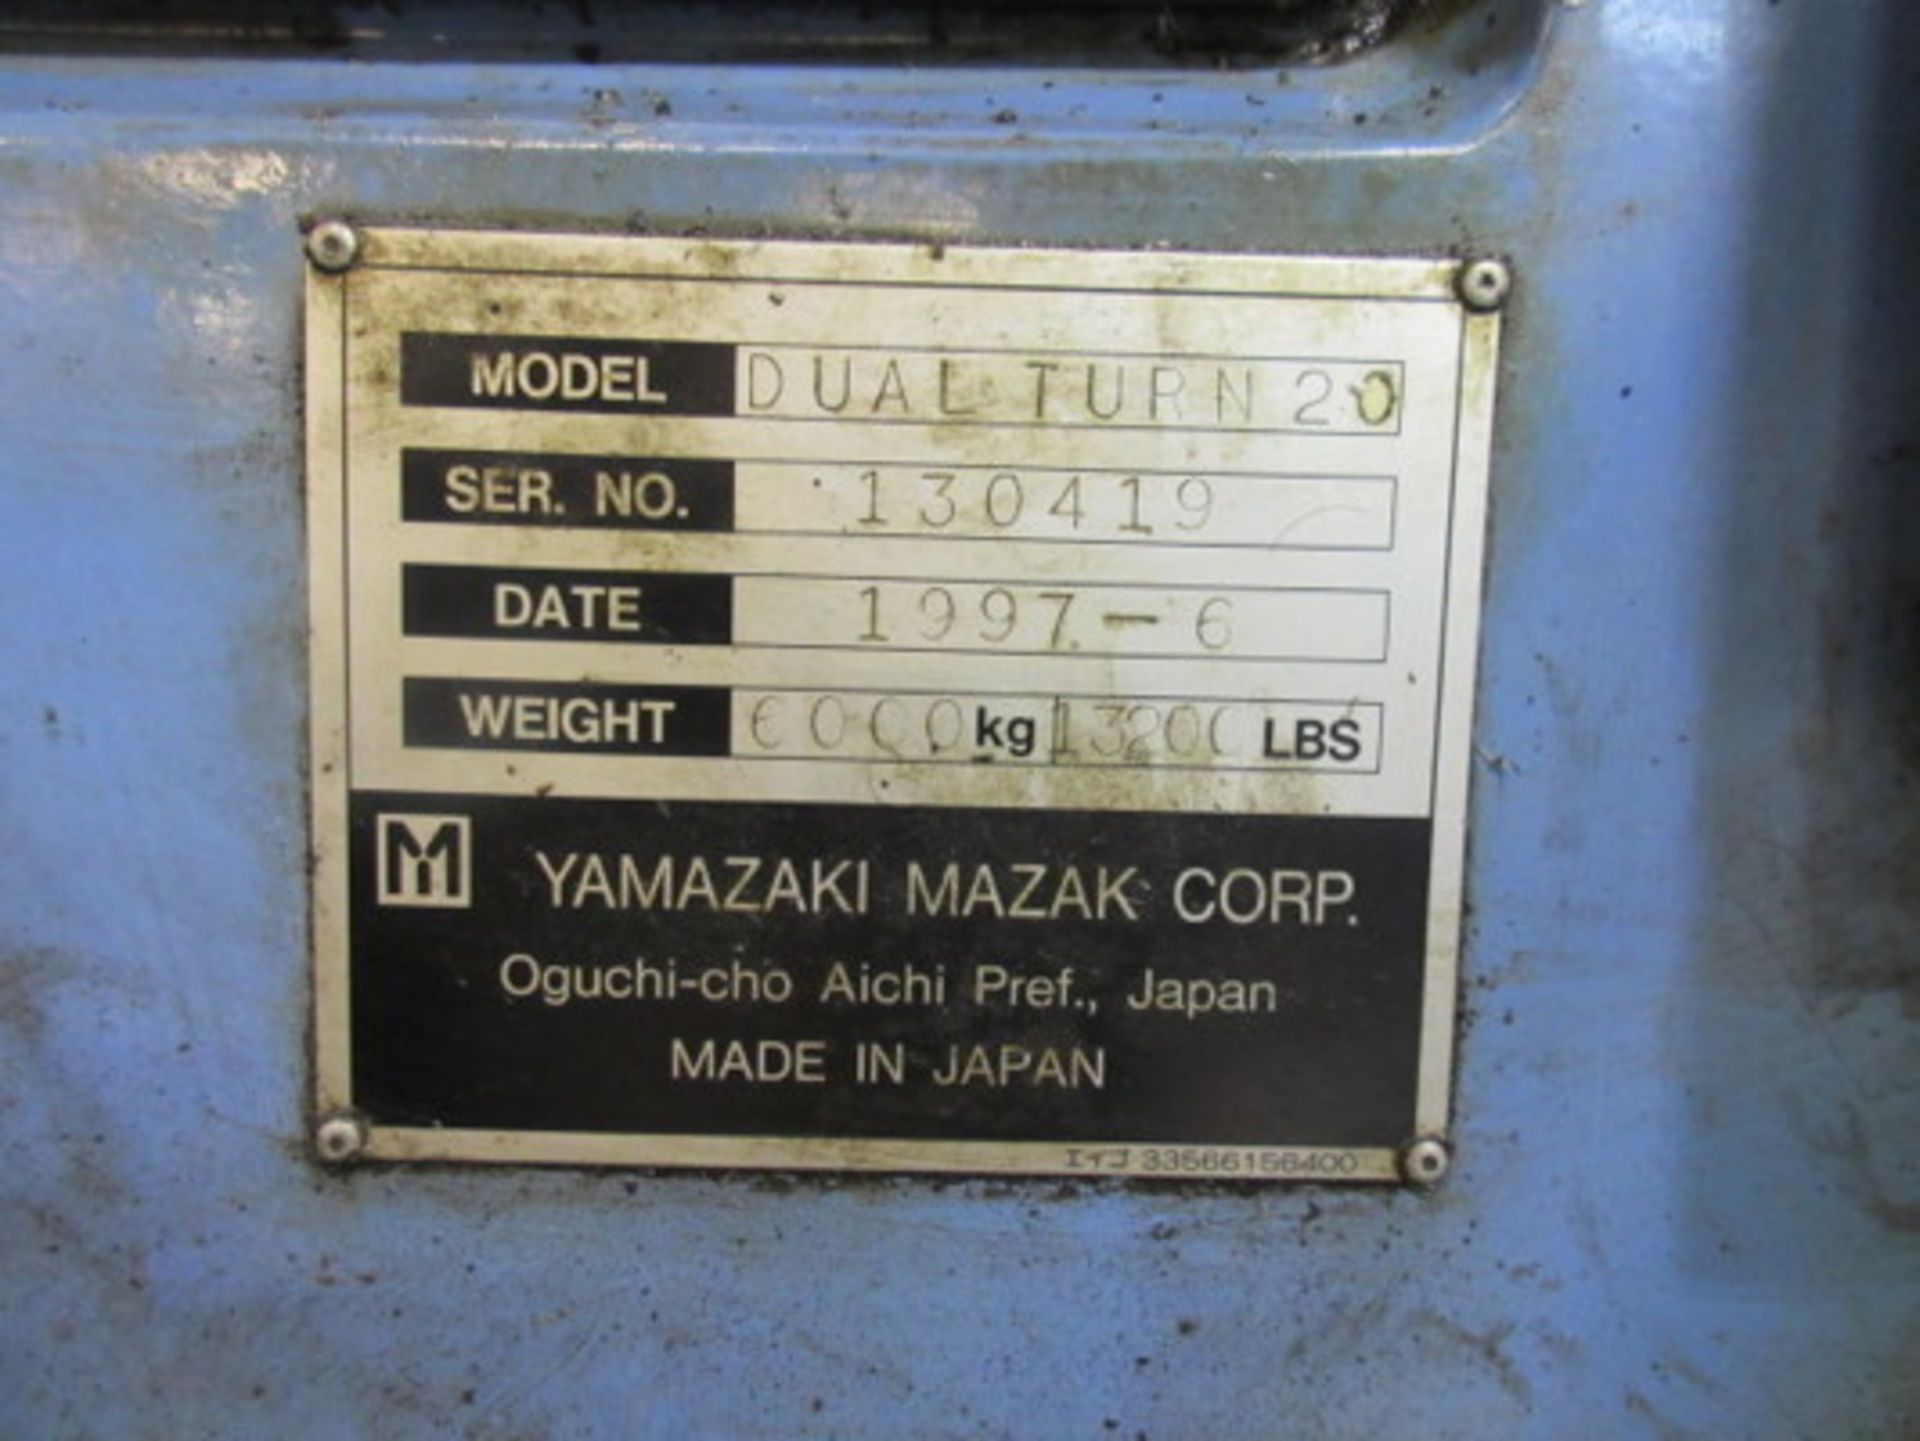 Yamazaki Mazak Dual Turn 20 CNC Lathe Turning Center, M/N- Dual Turn 20, S/N- 130419 - Lot Location: - Image 6 of 6